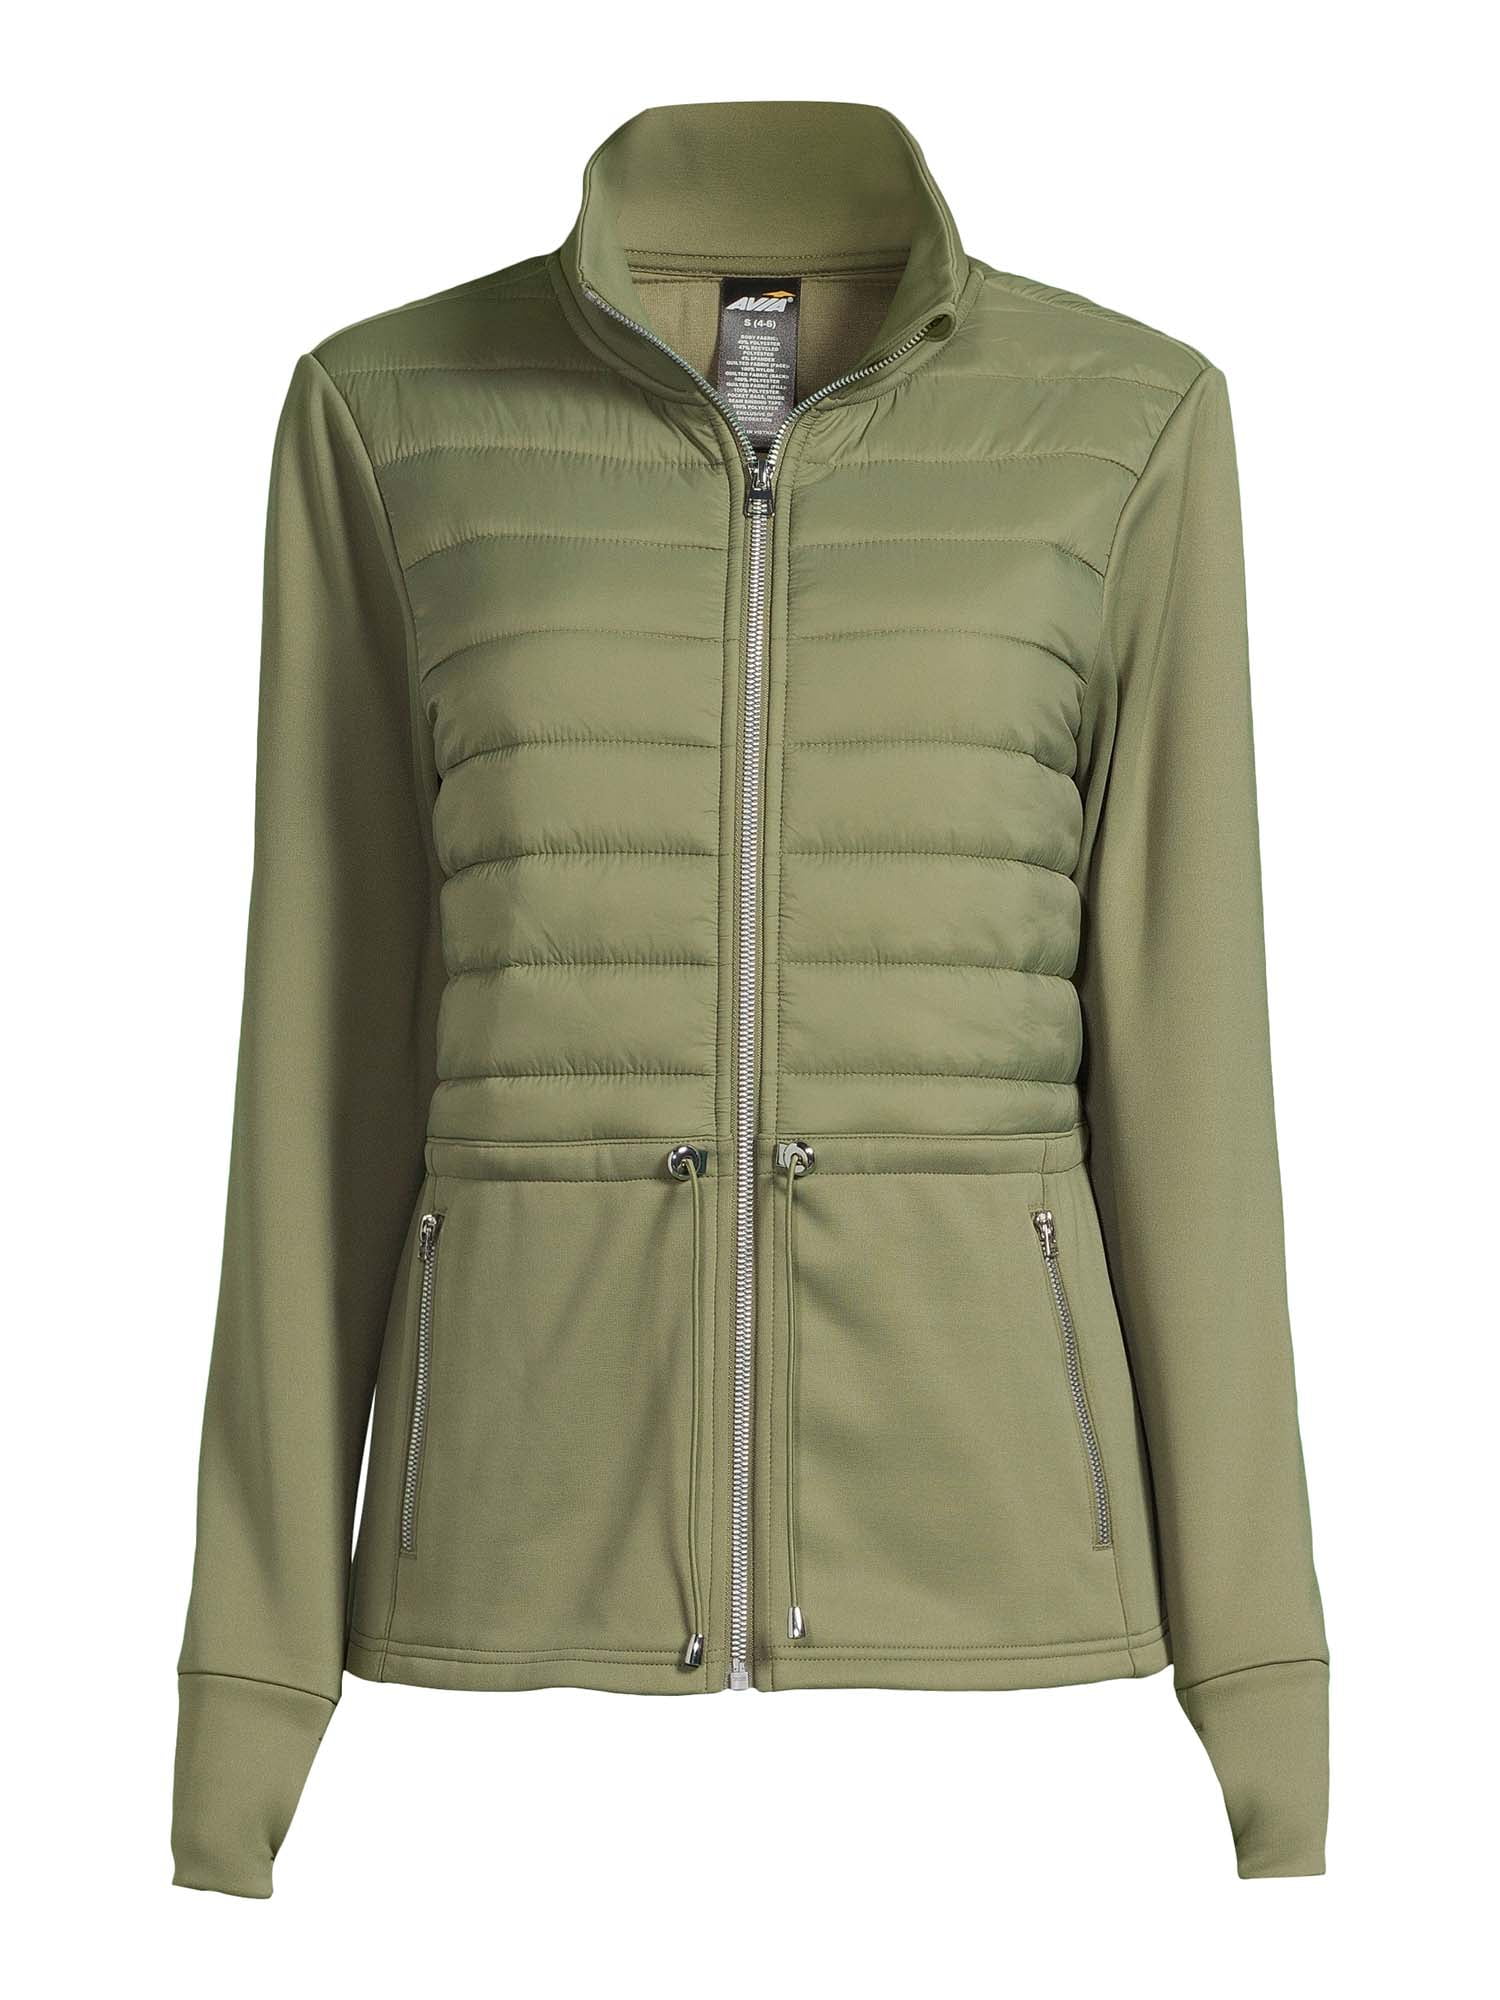 AVIA Women's Fleece-Line Softshell Jacket - Size XL - clothing